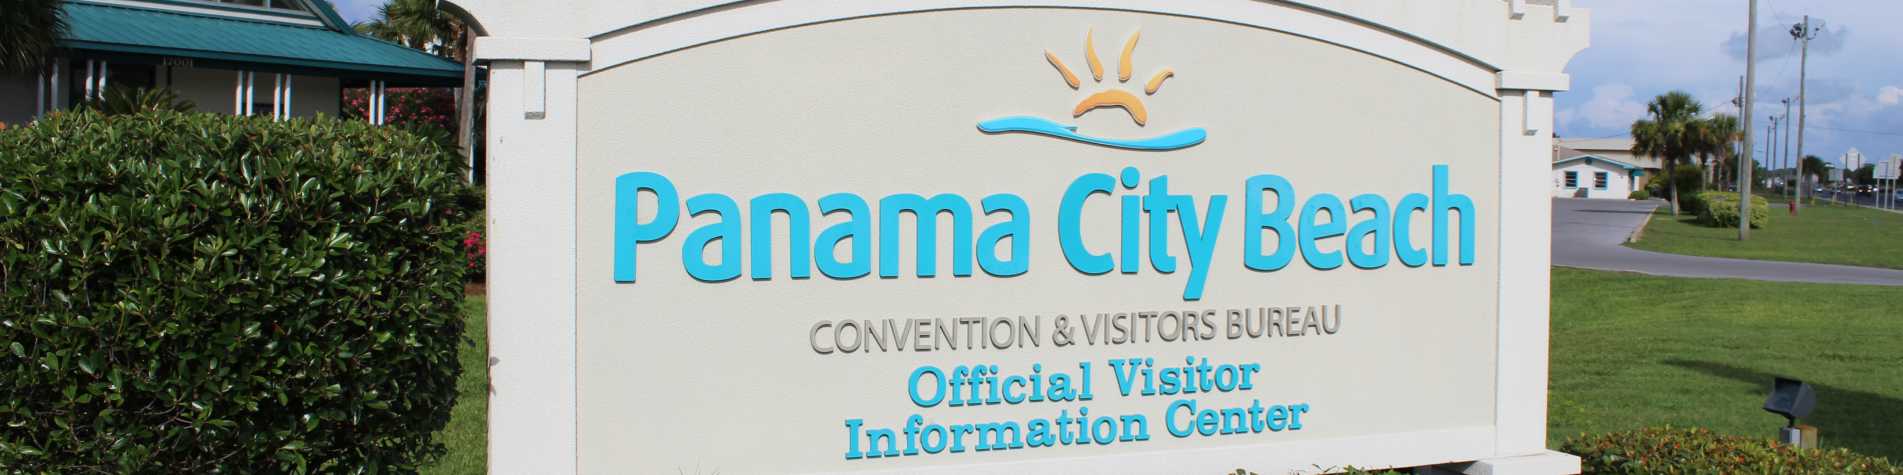 Visitor Information Center Panama City Beach Florida